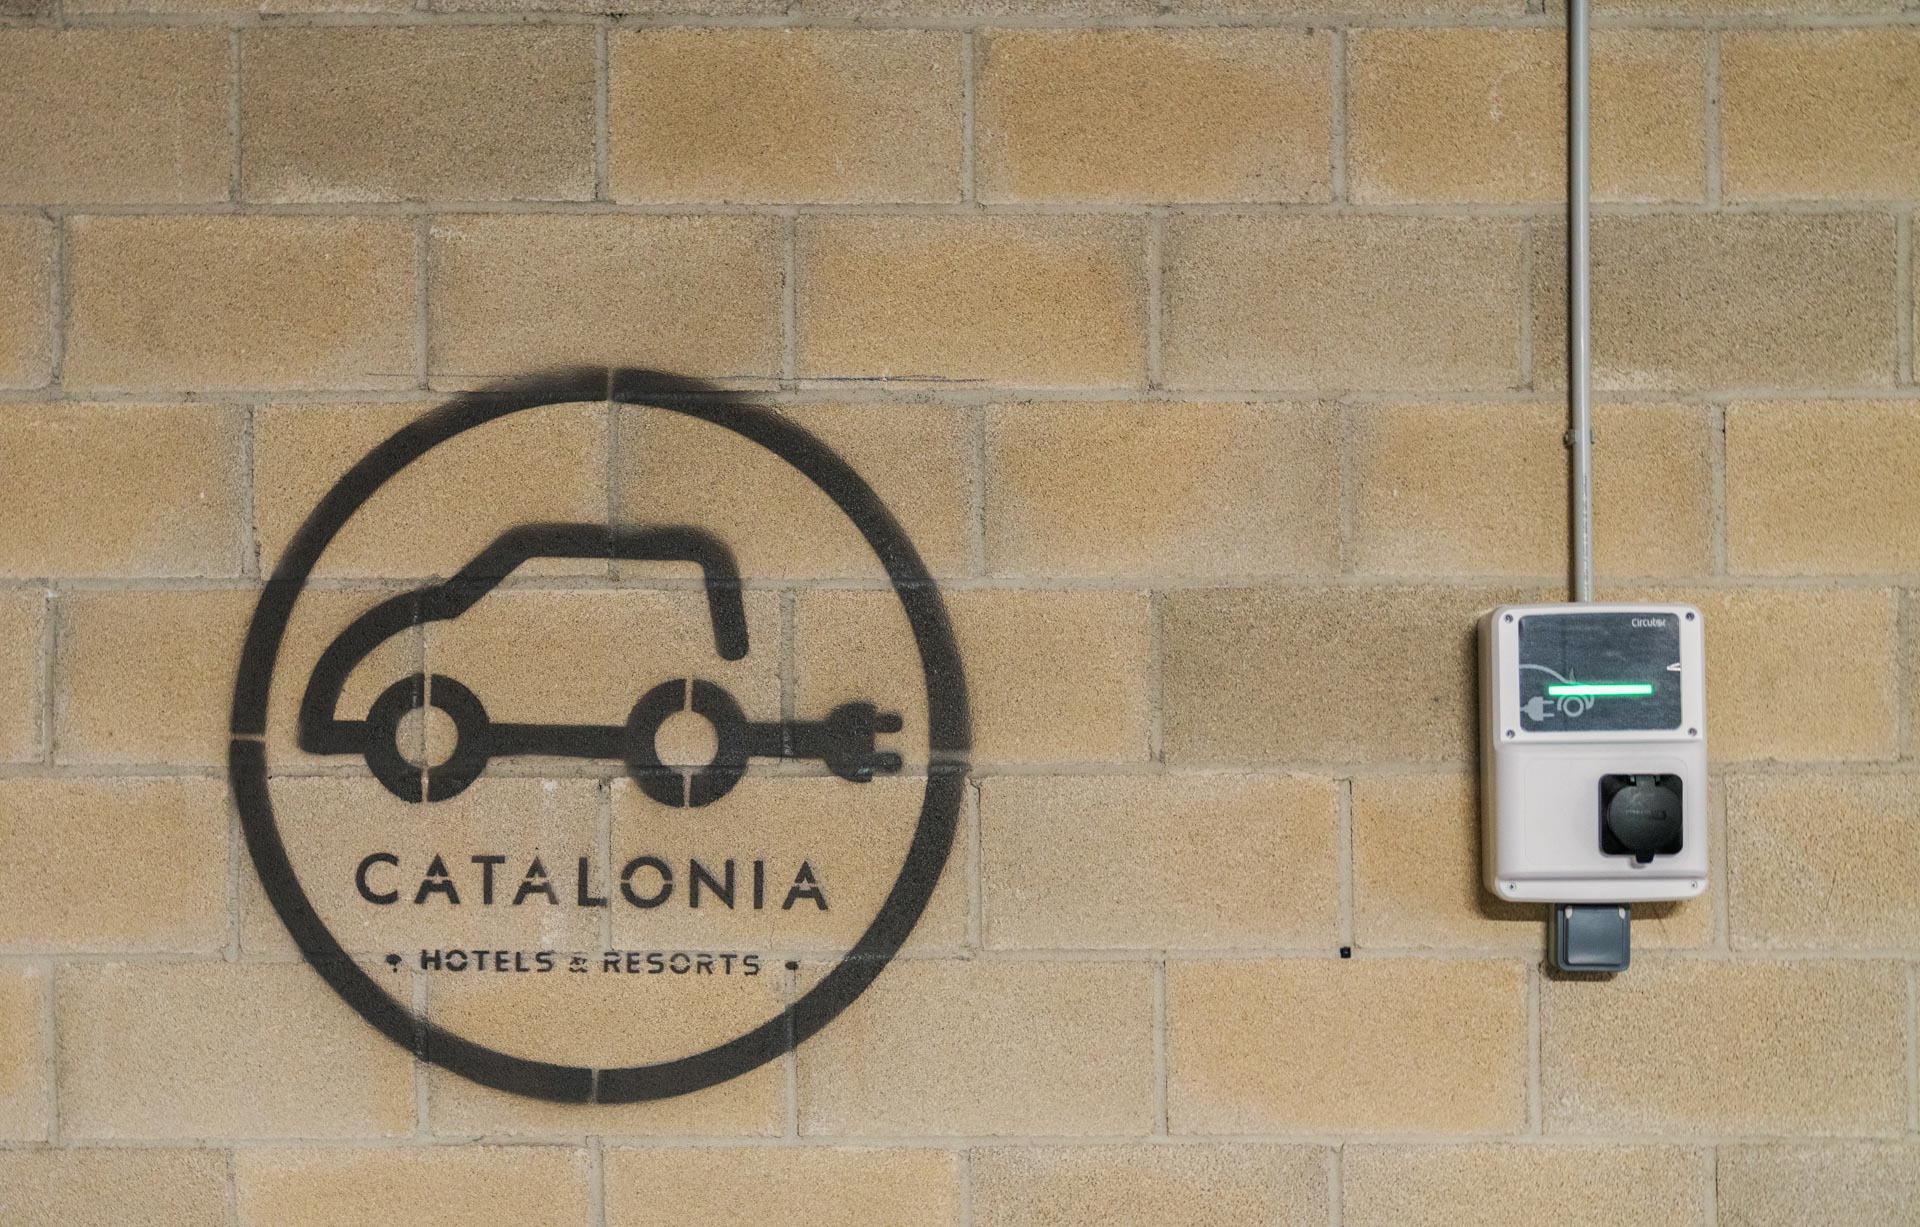 EL car charging station